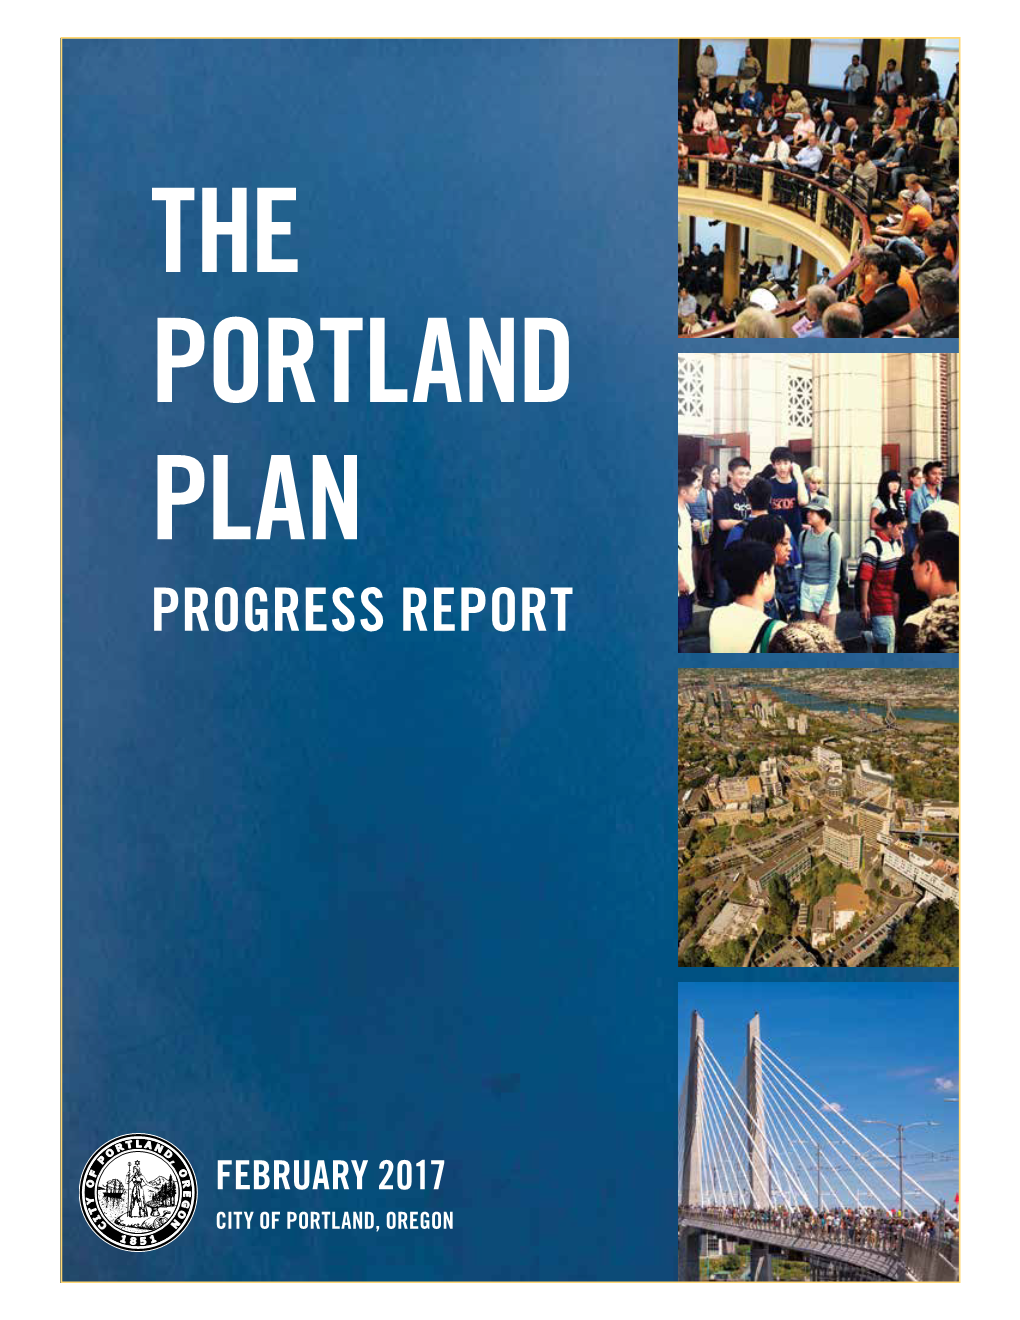 The Portland Plan Progress Report